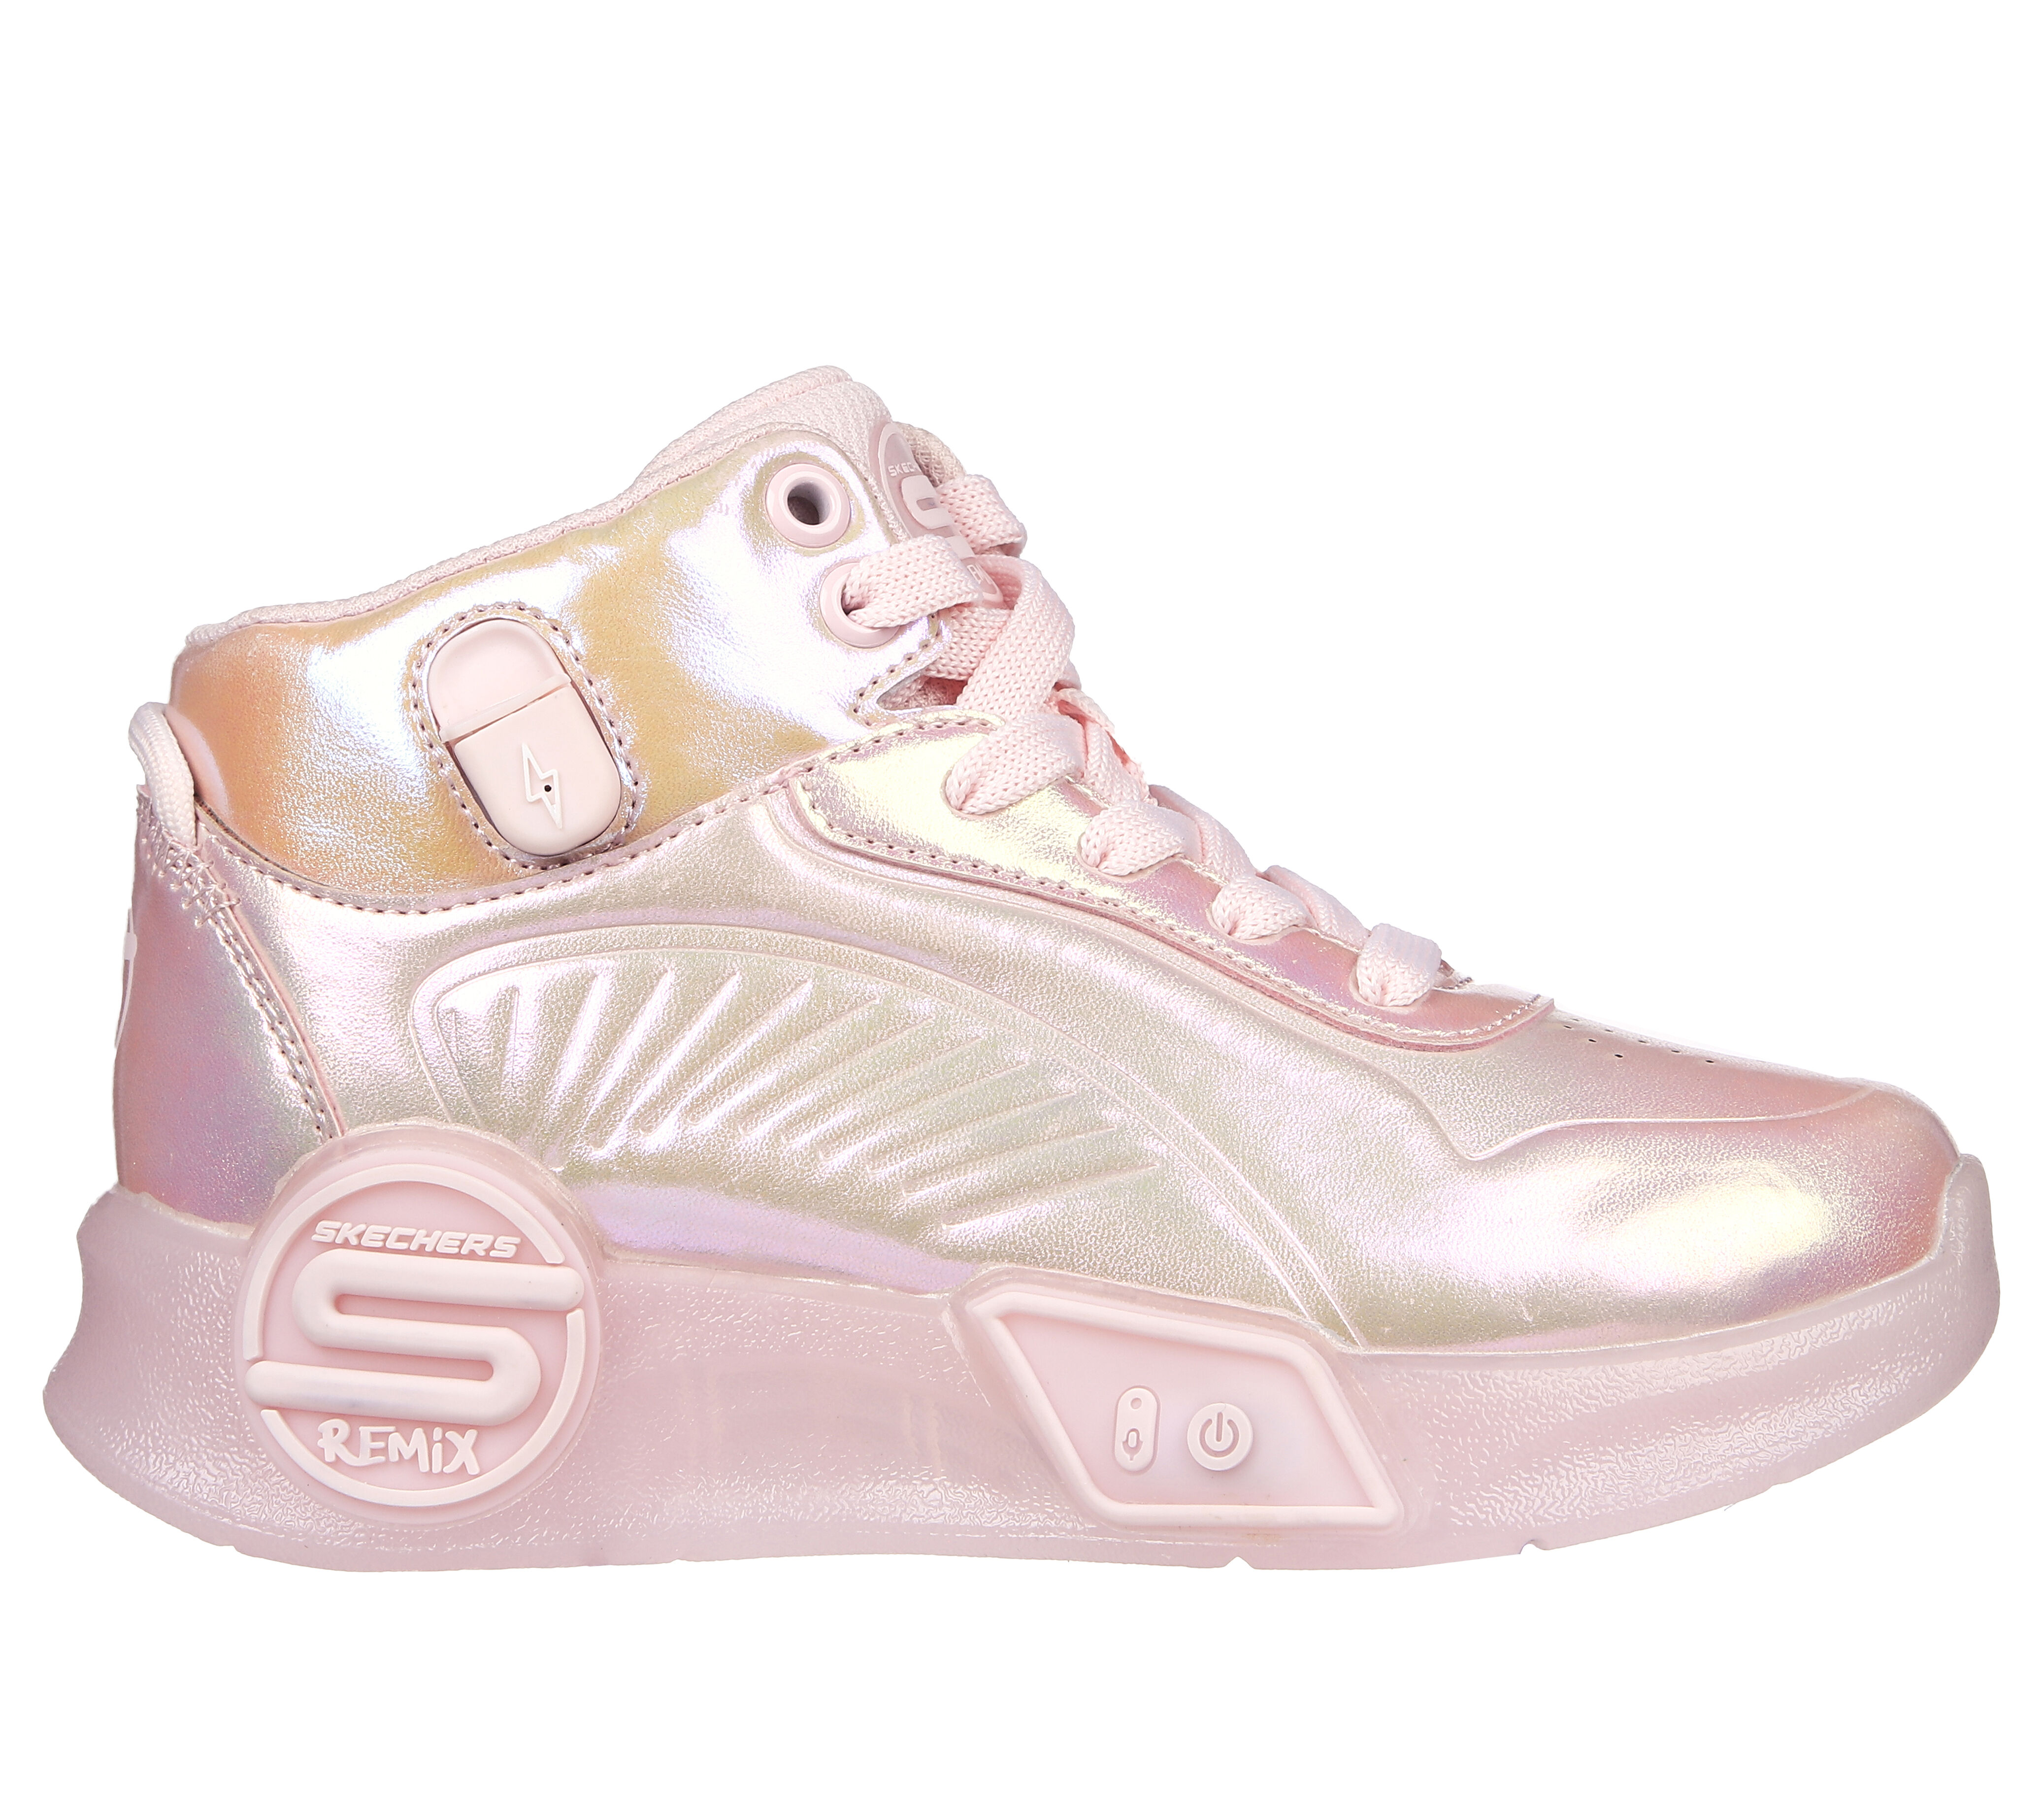 Toddler Girls Crystal Boots Lights LED Luminous Sneakers Flower Decoration Zipper Flat Shoes High Top Lightweight Non-Slip First Walking Shoes 